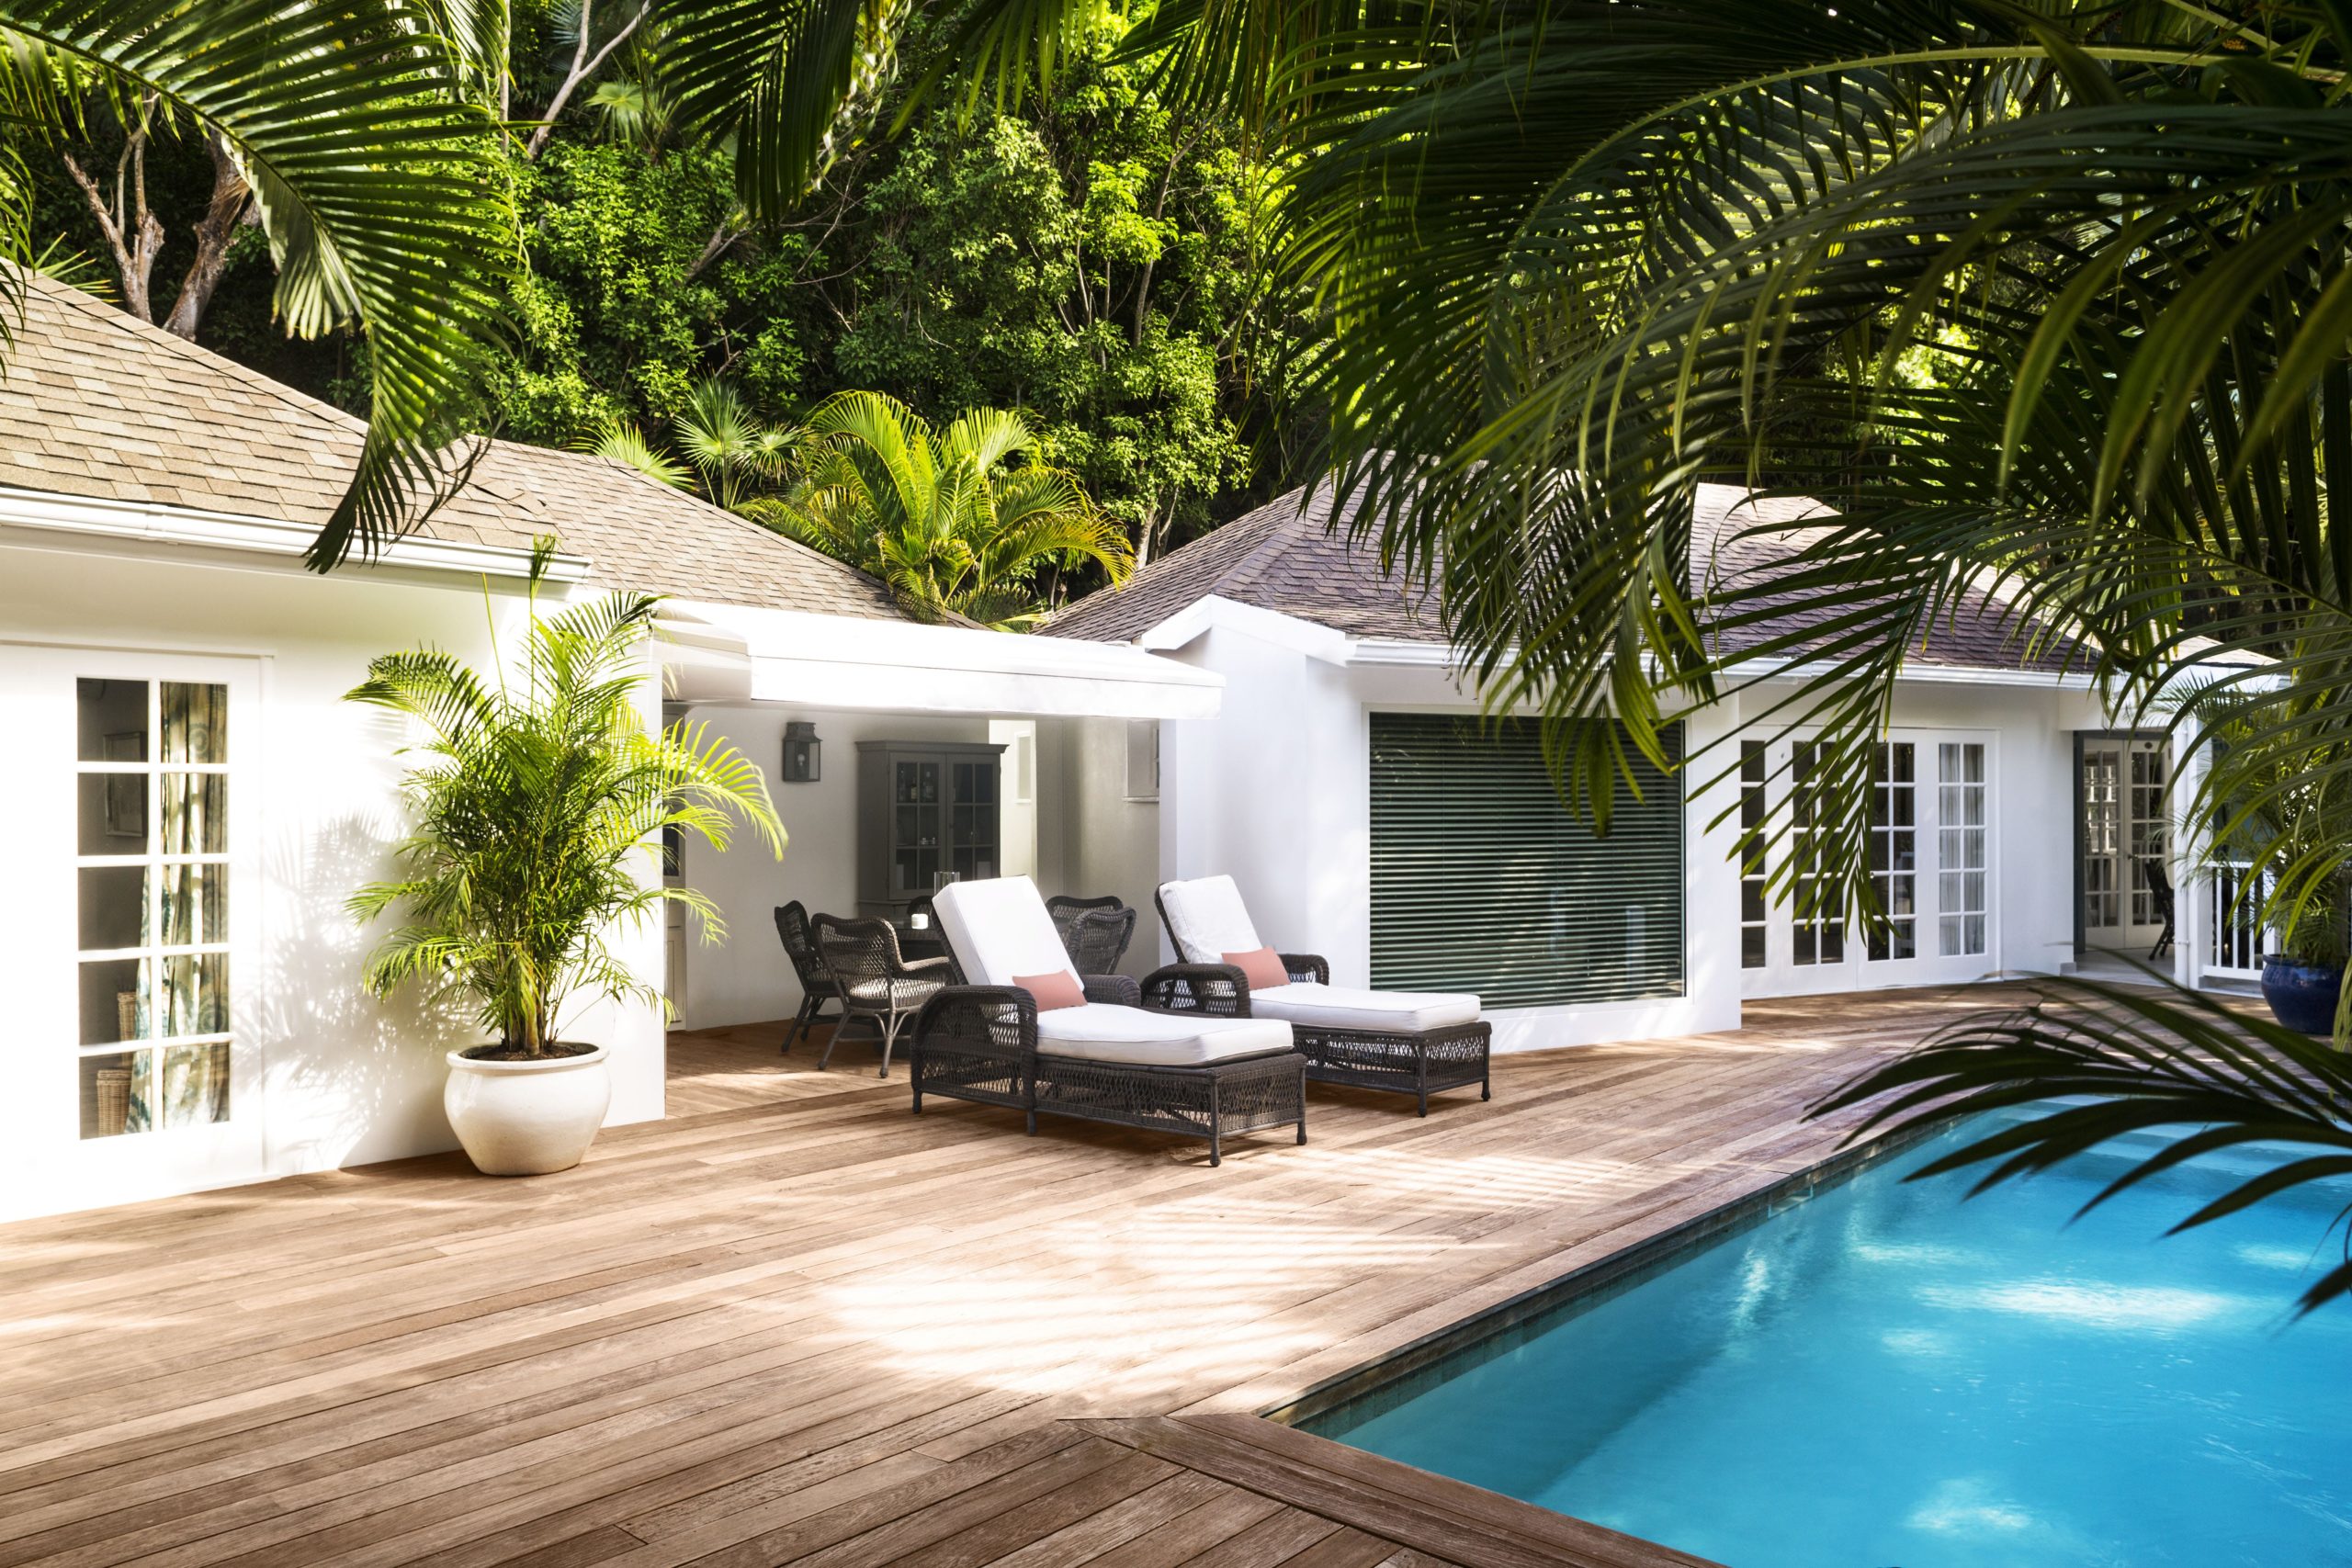 Cheval Blanc, St-Barts, Caribbean Luxury Hotel, 2 Bedrooms Garden Suite, Casol